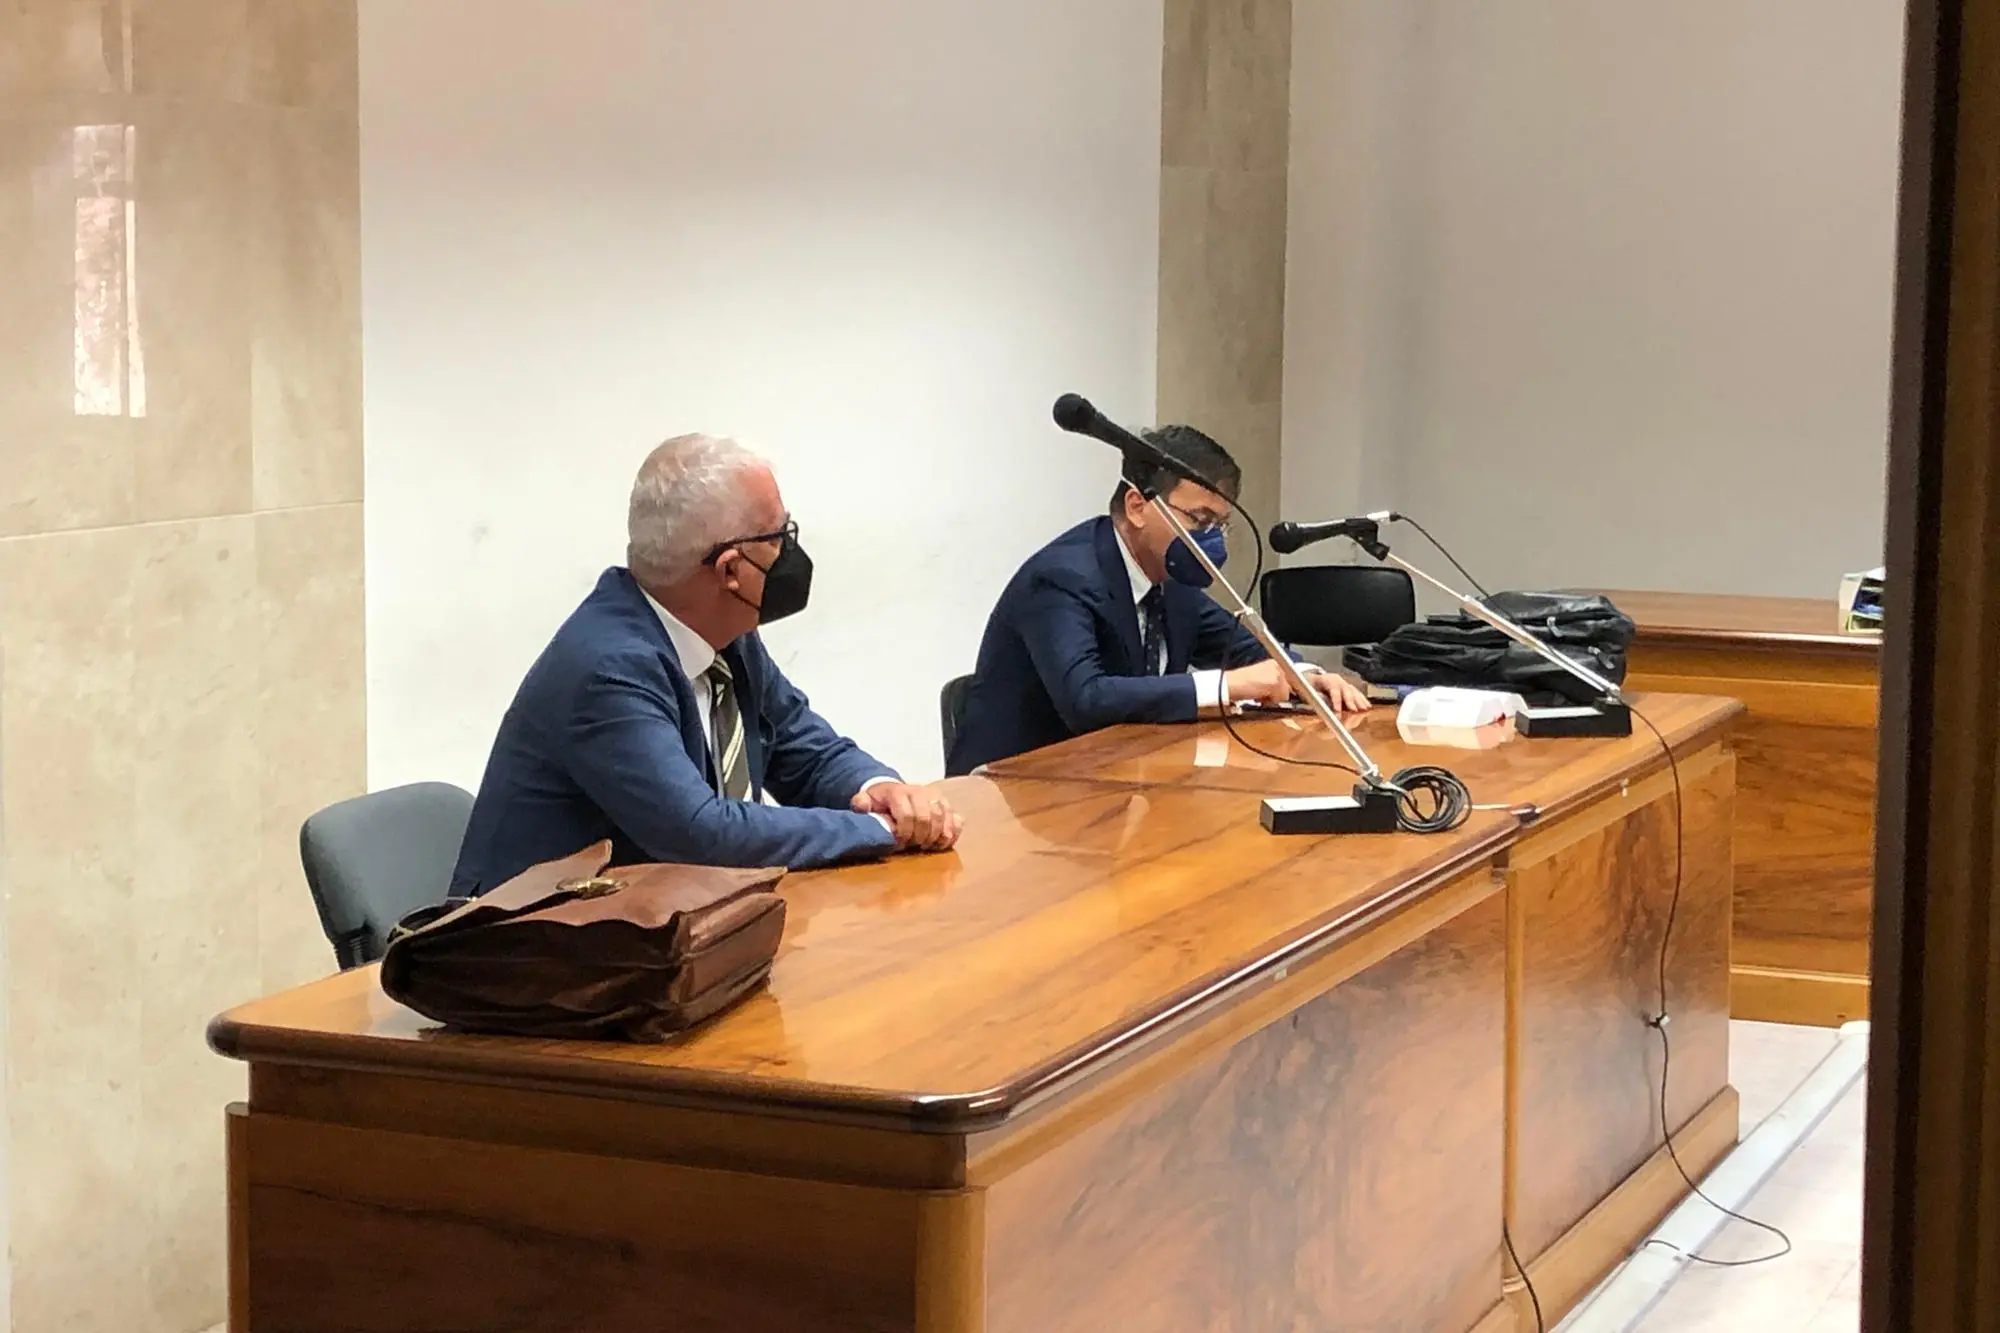 The lawyer Salvatore Casula and the lawyer Massimiliano Ravenna (Photo Manunza)